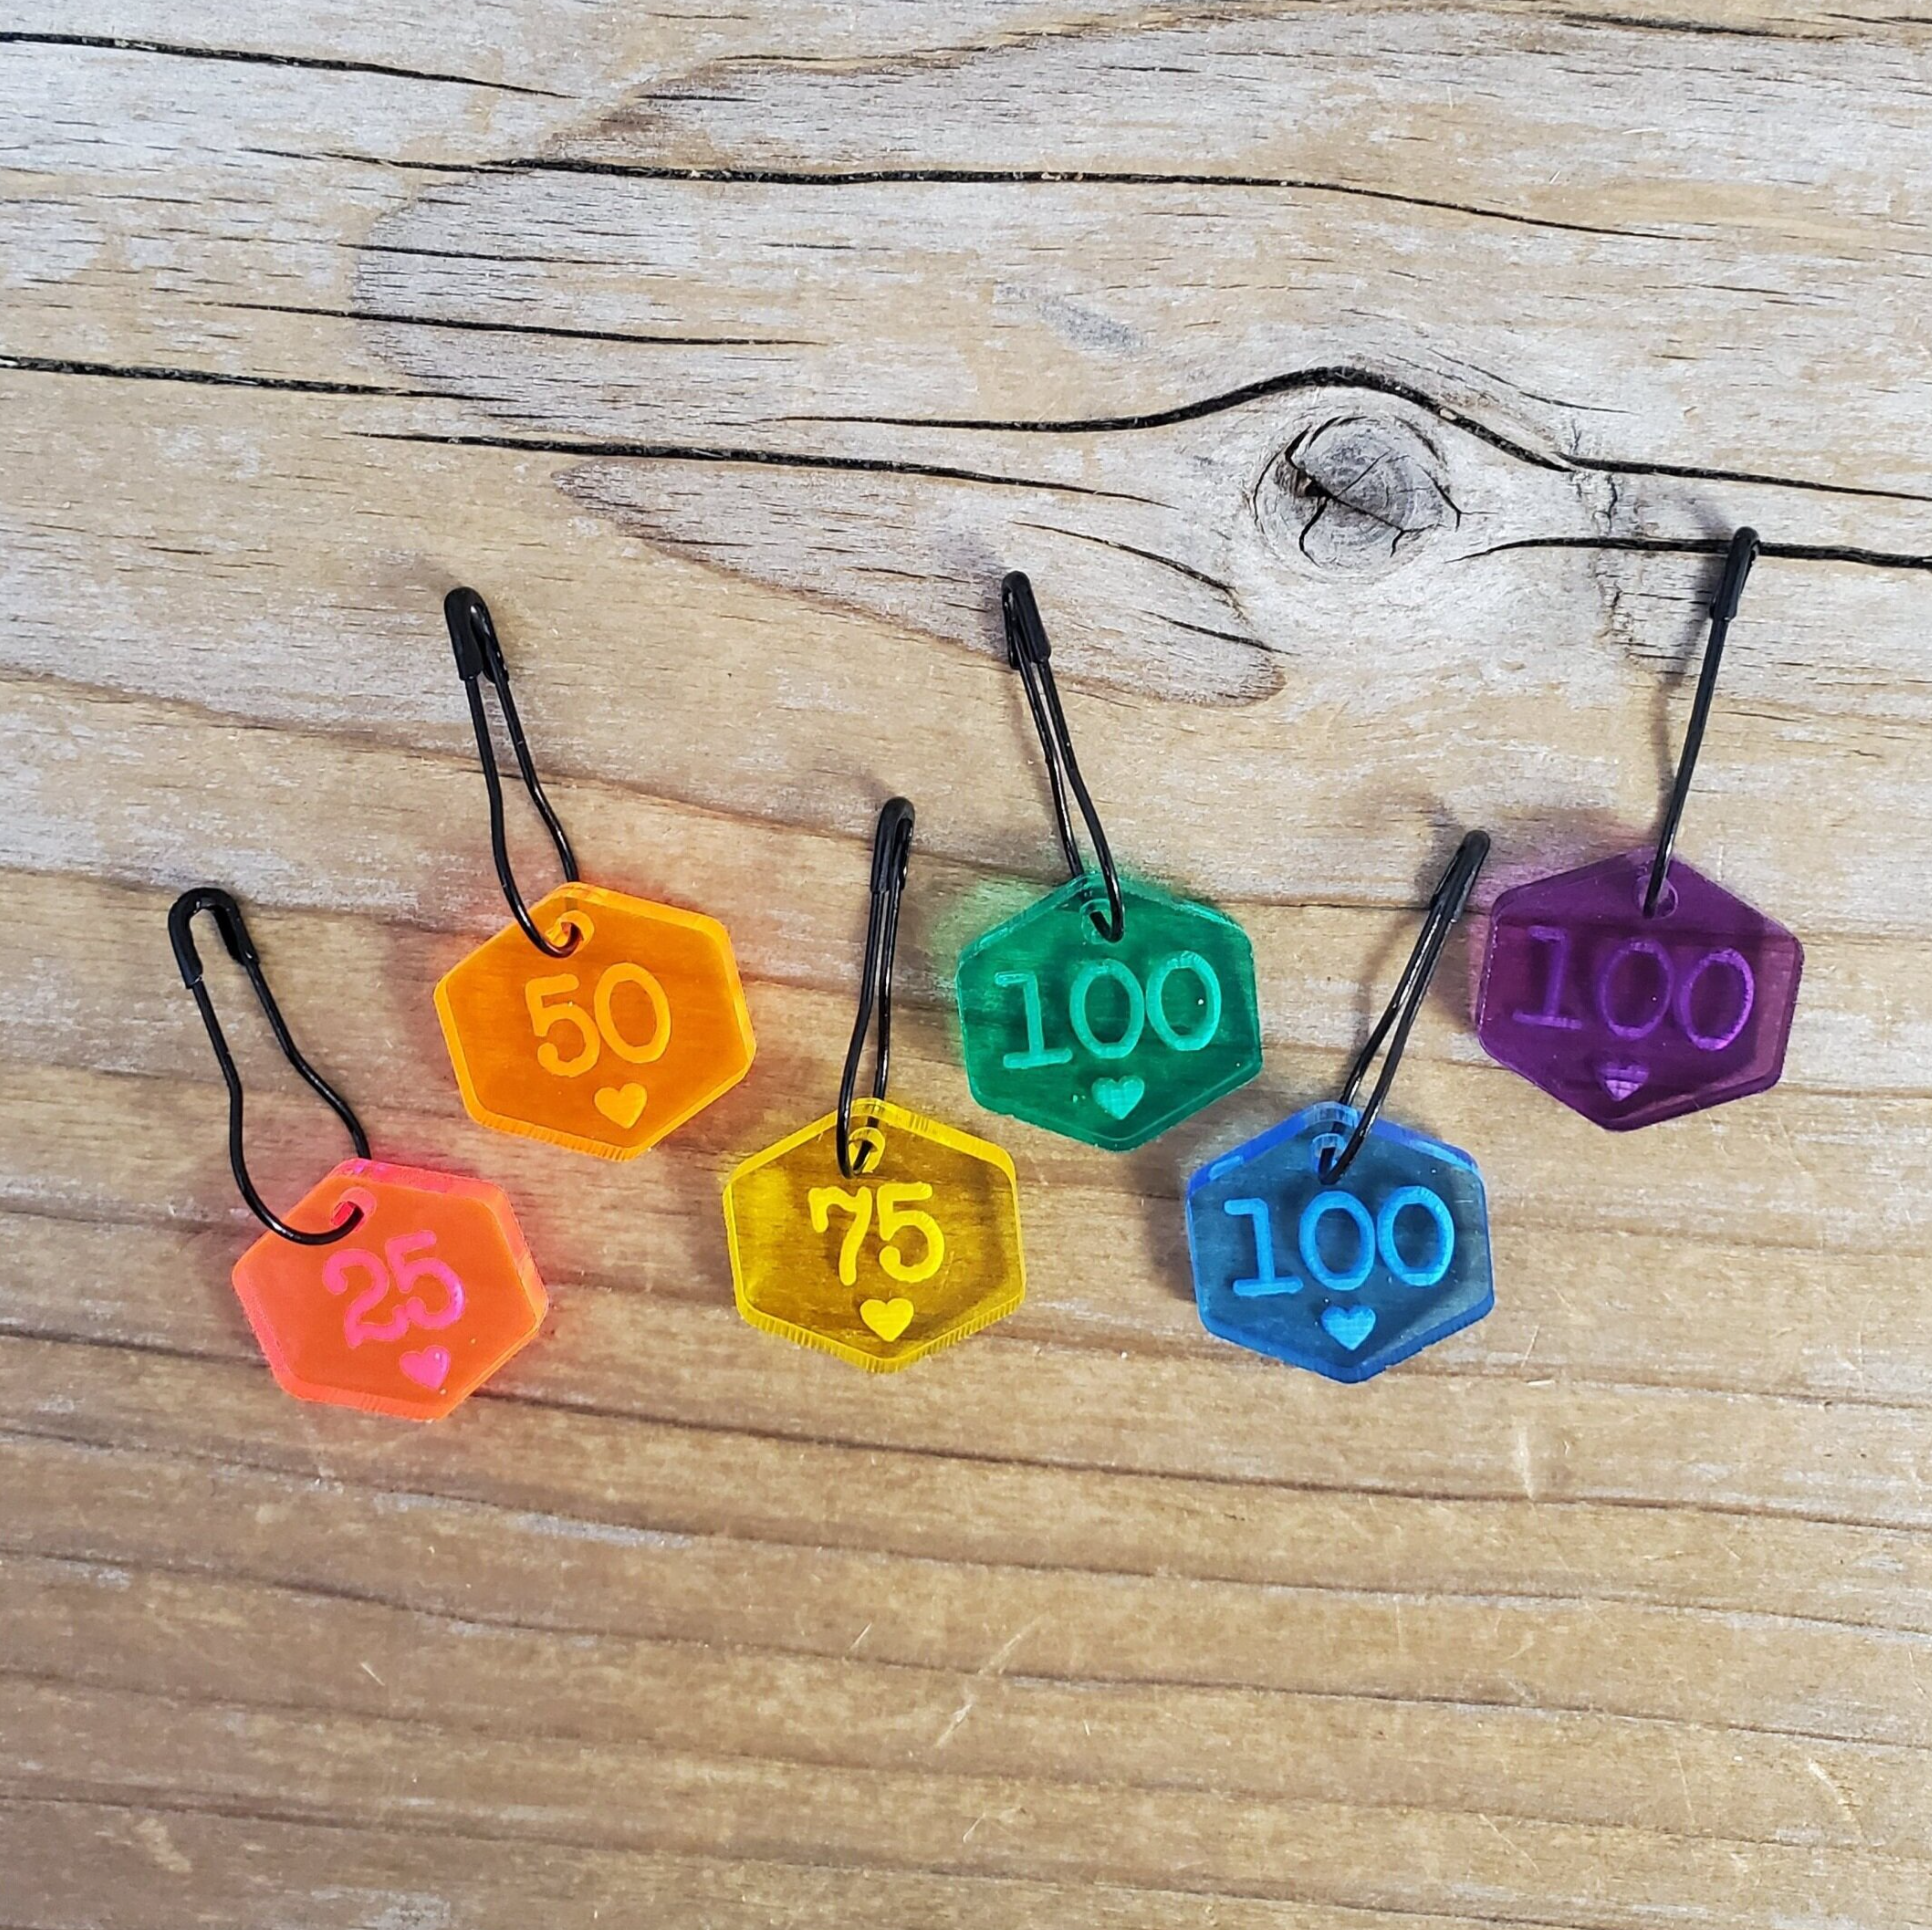 Rainbow Snag Free Stitch Markers, Assorted Sets, Pretty Warm Designs